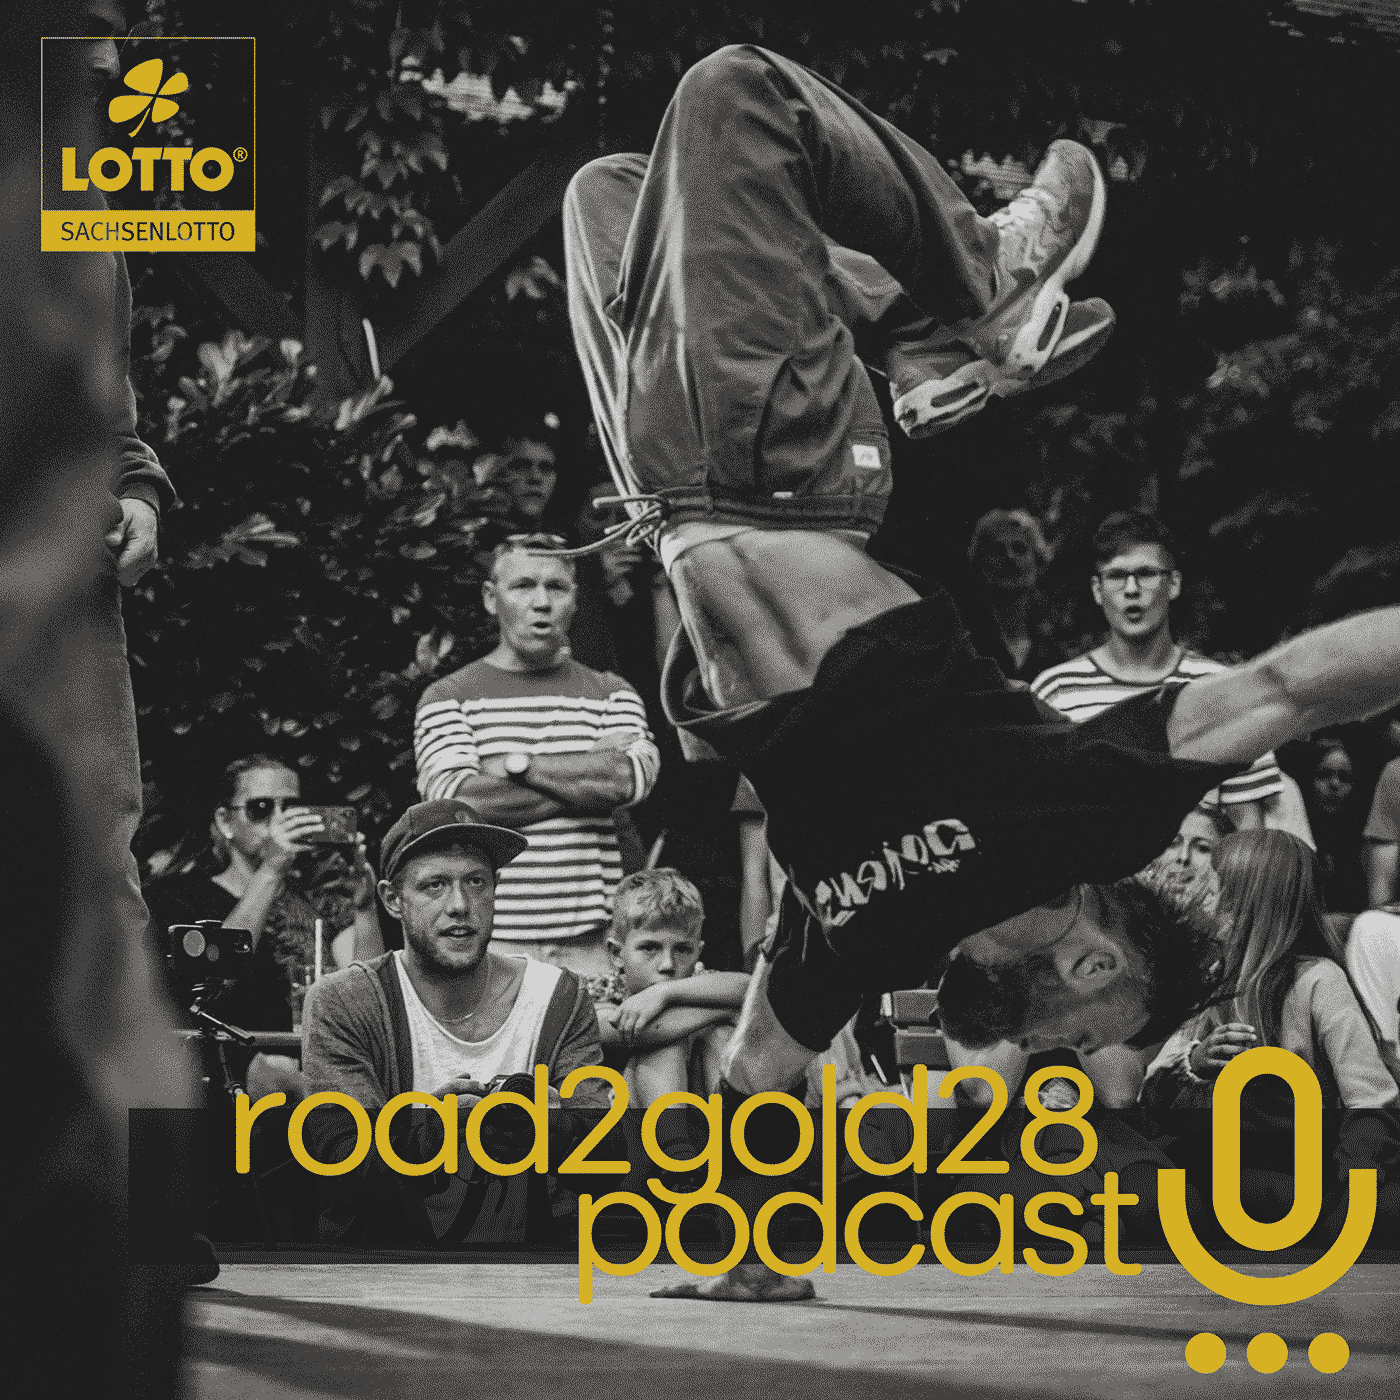 Sachsenlotto ROAD 2 GOLD Podcast